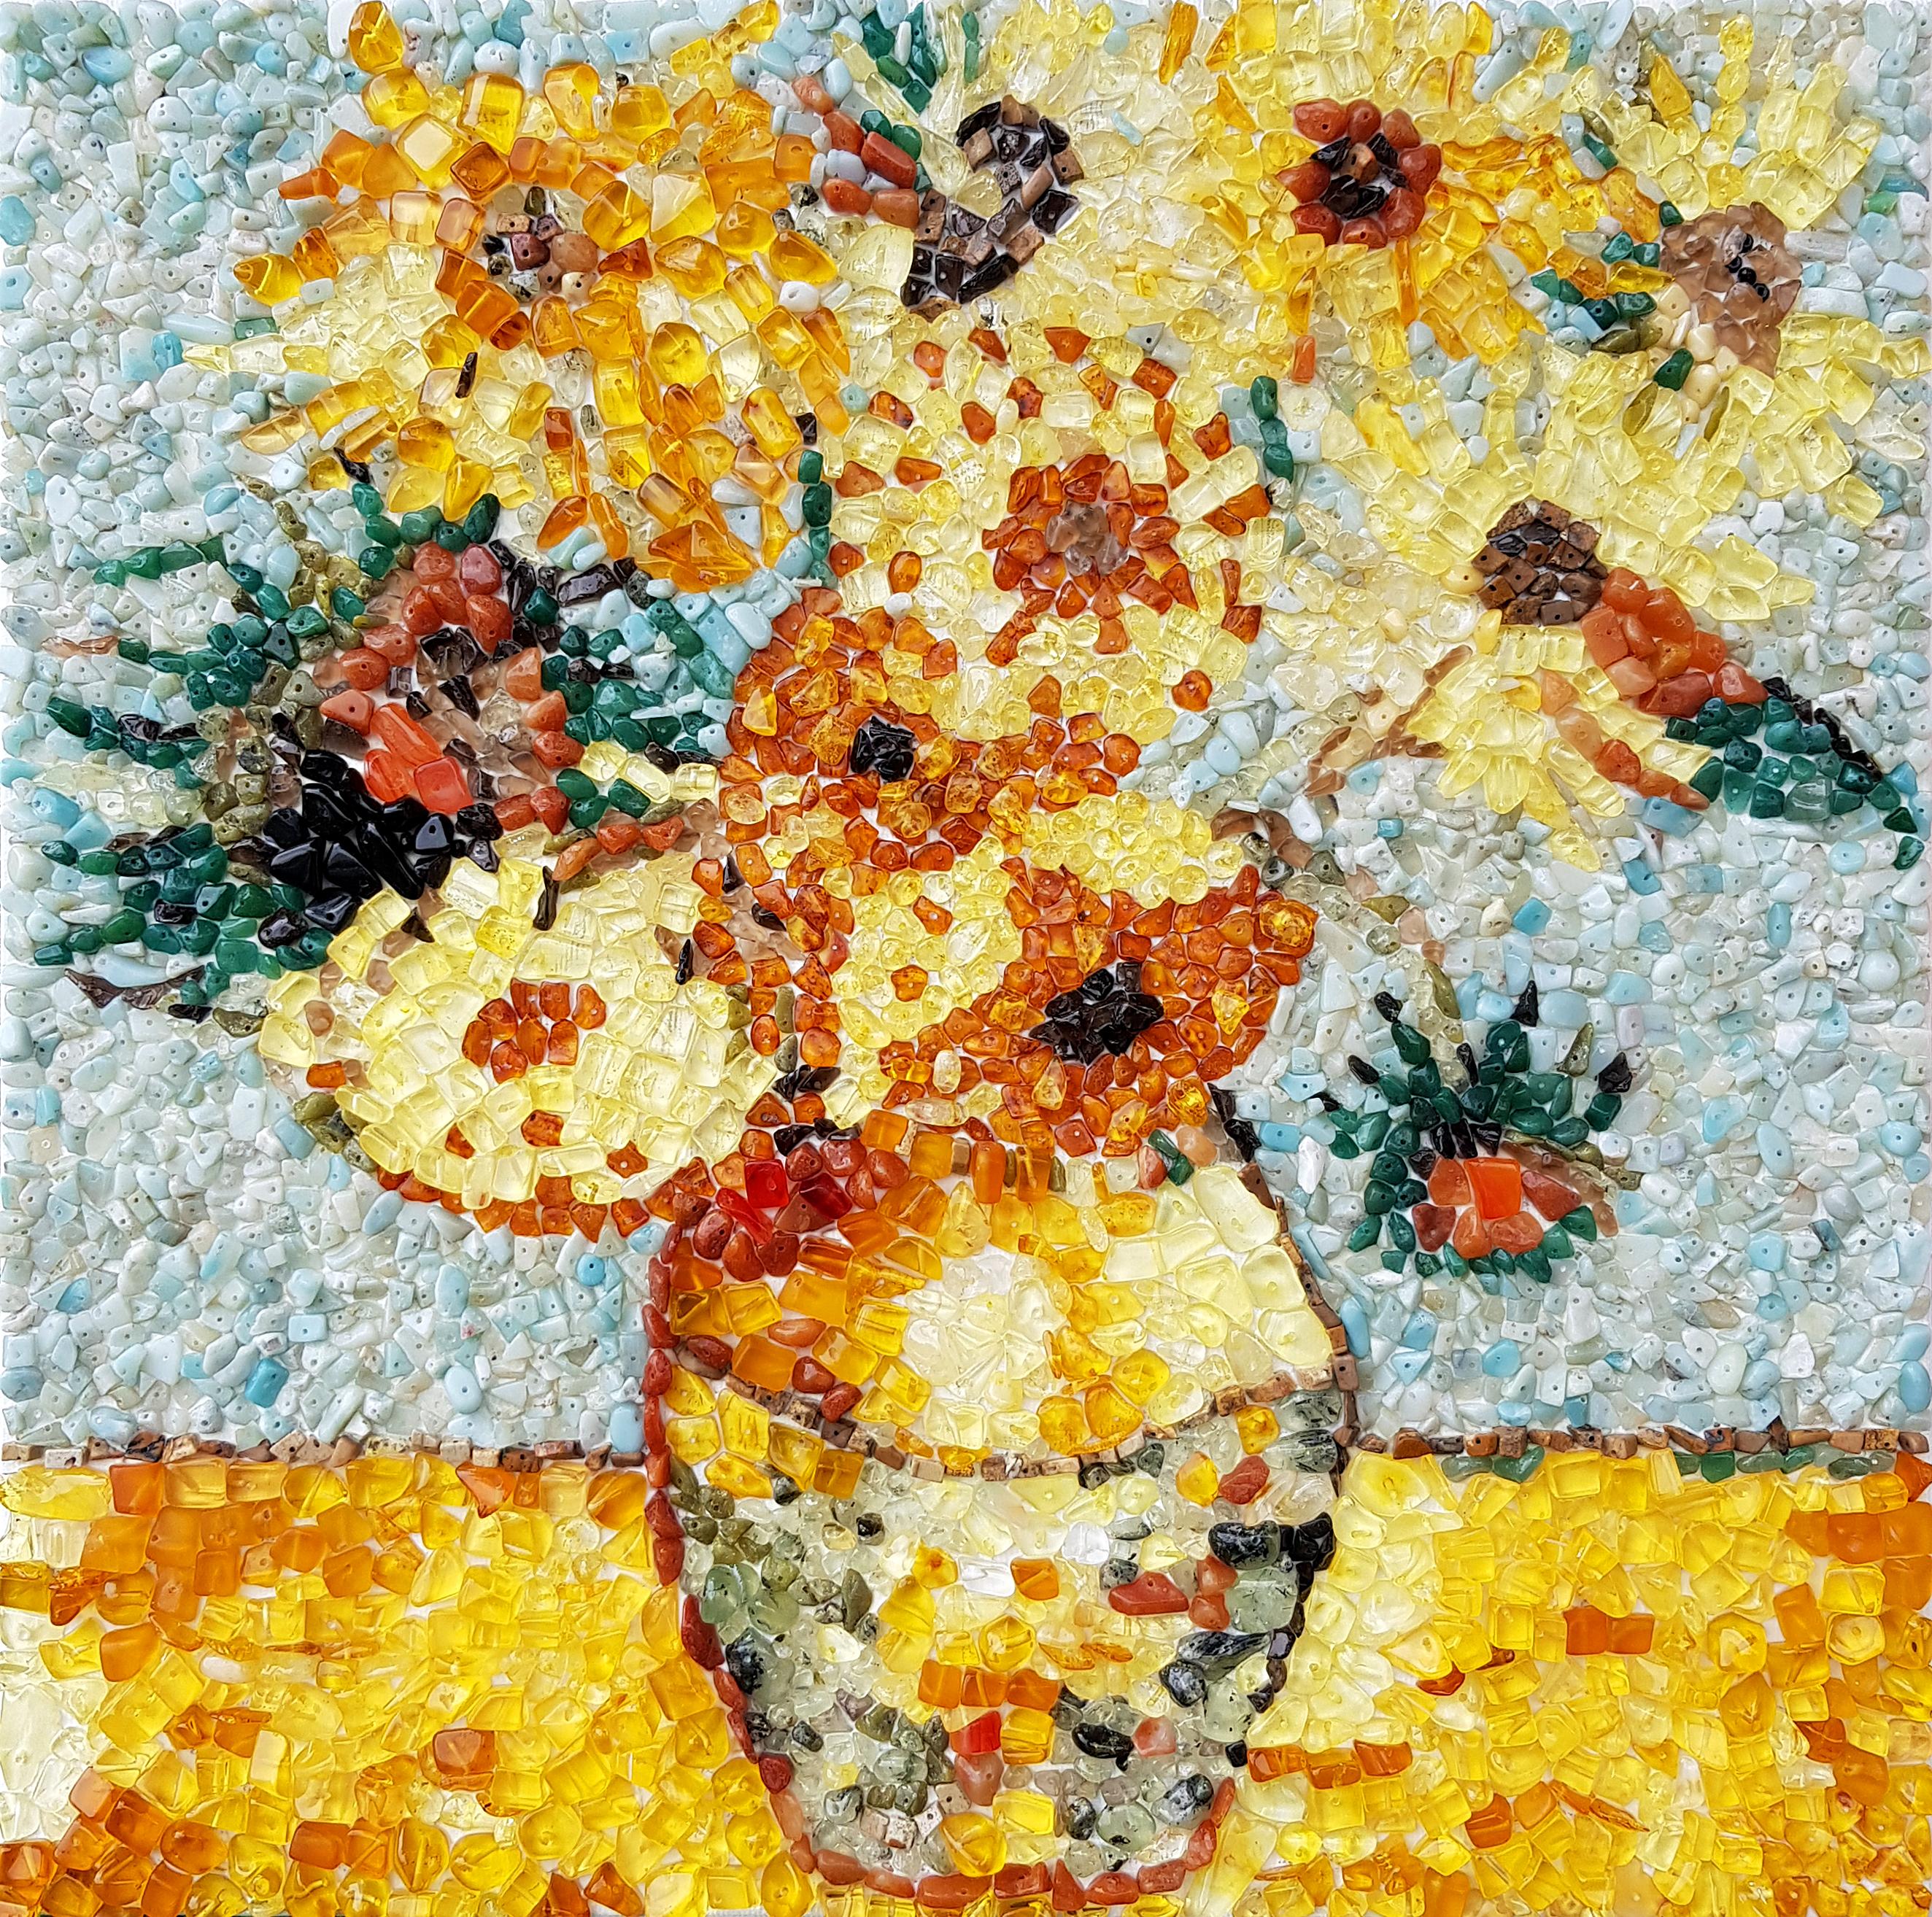 Crystal Sunflowers - In memory of Vincent Van Gogh - Mixed Media Art by Joanna Breycheva